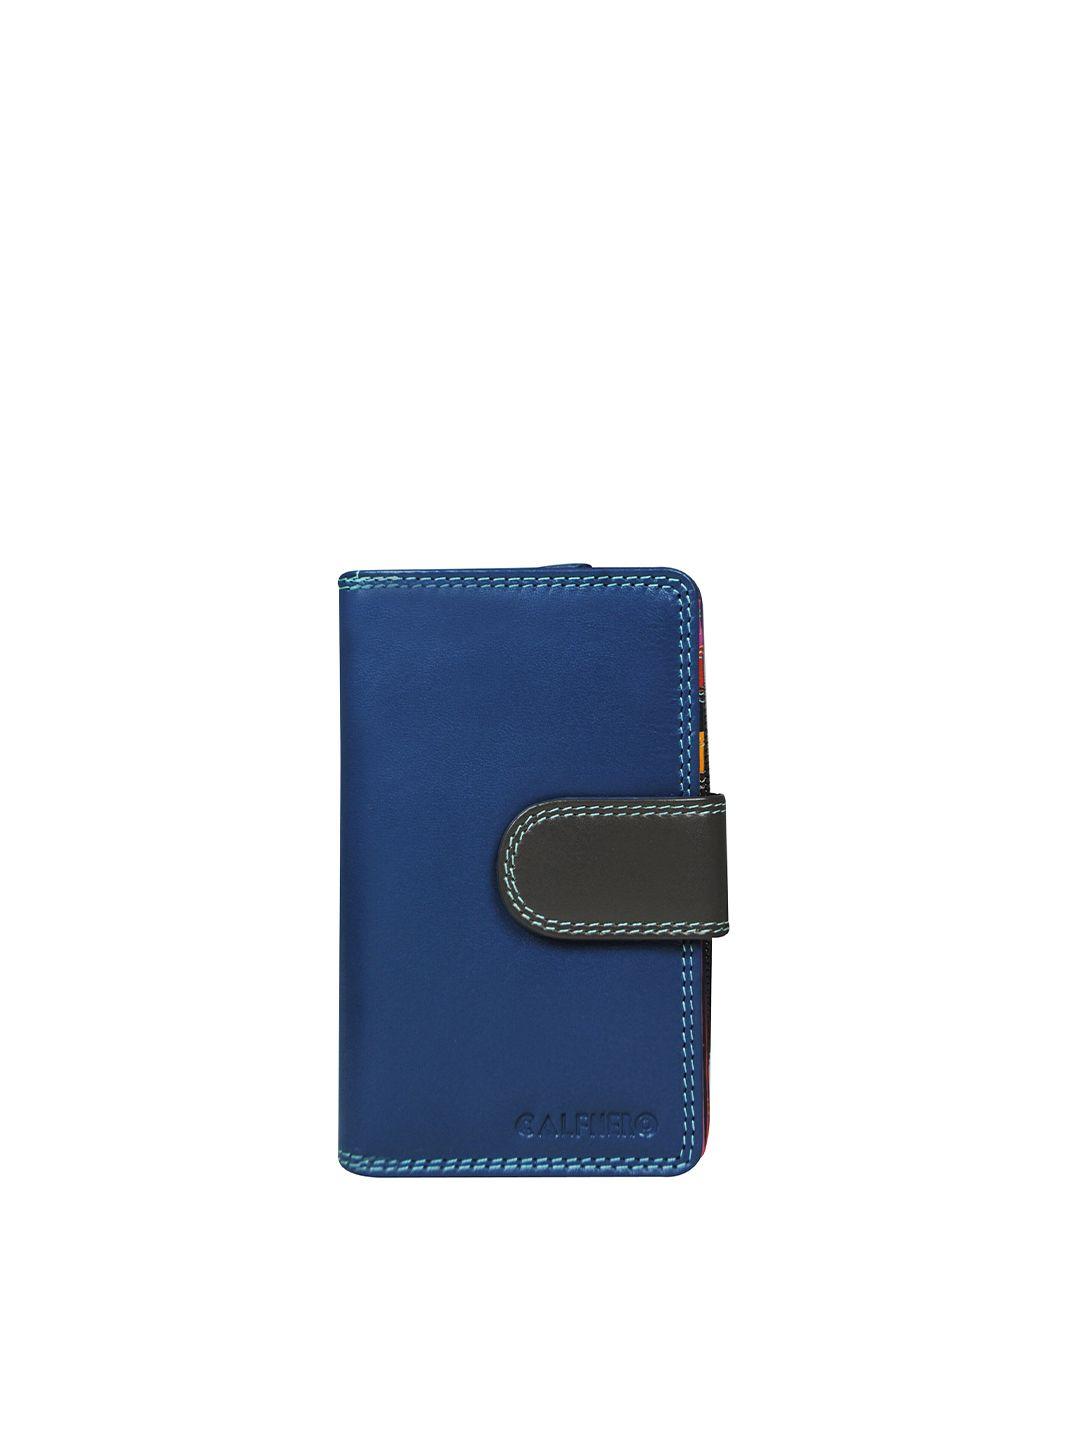 calfnero women blue leather two fold wallet